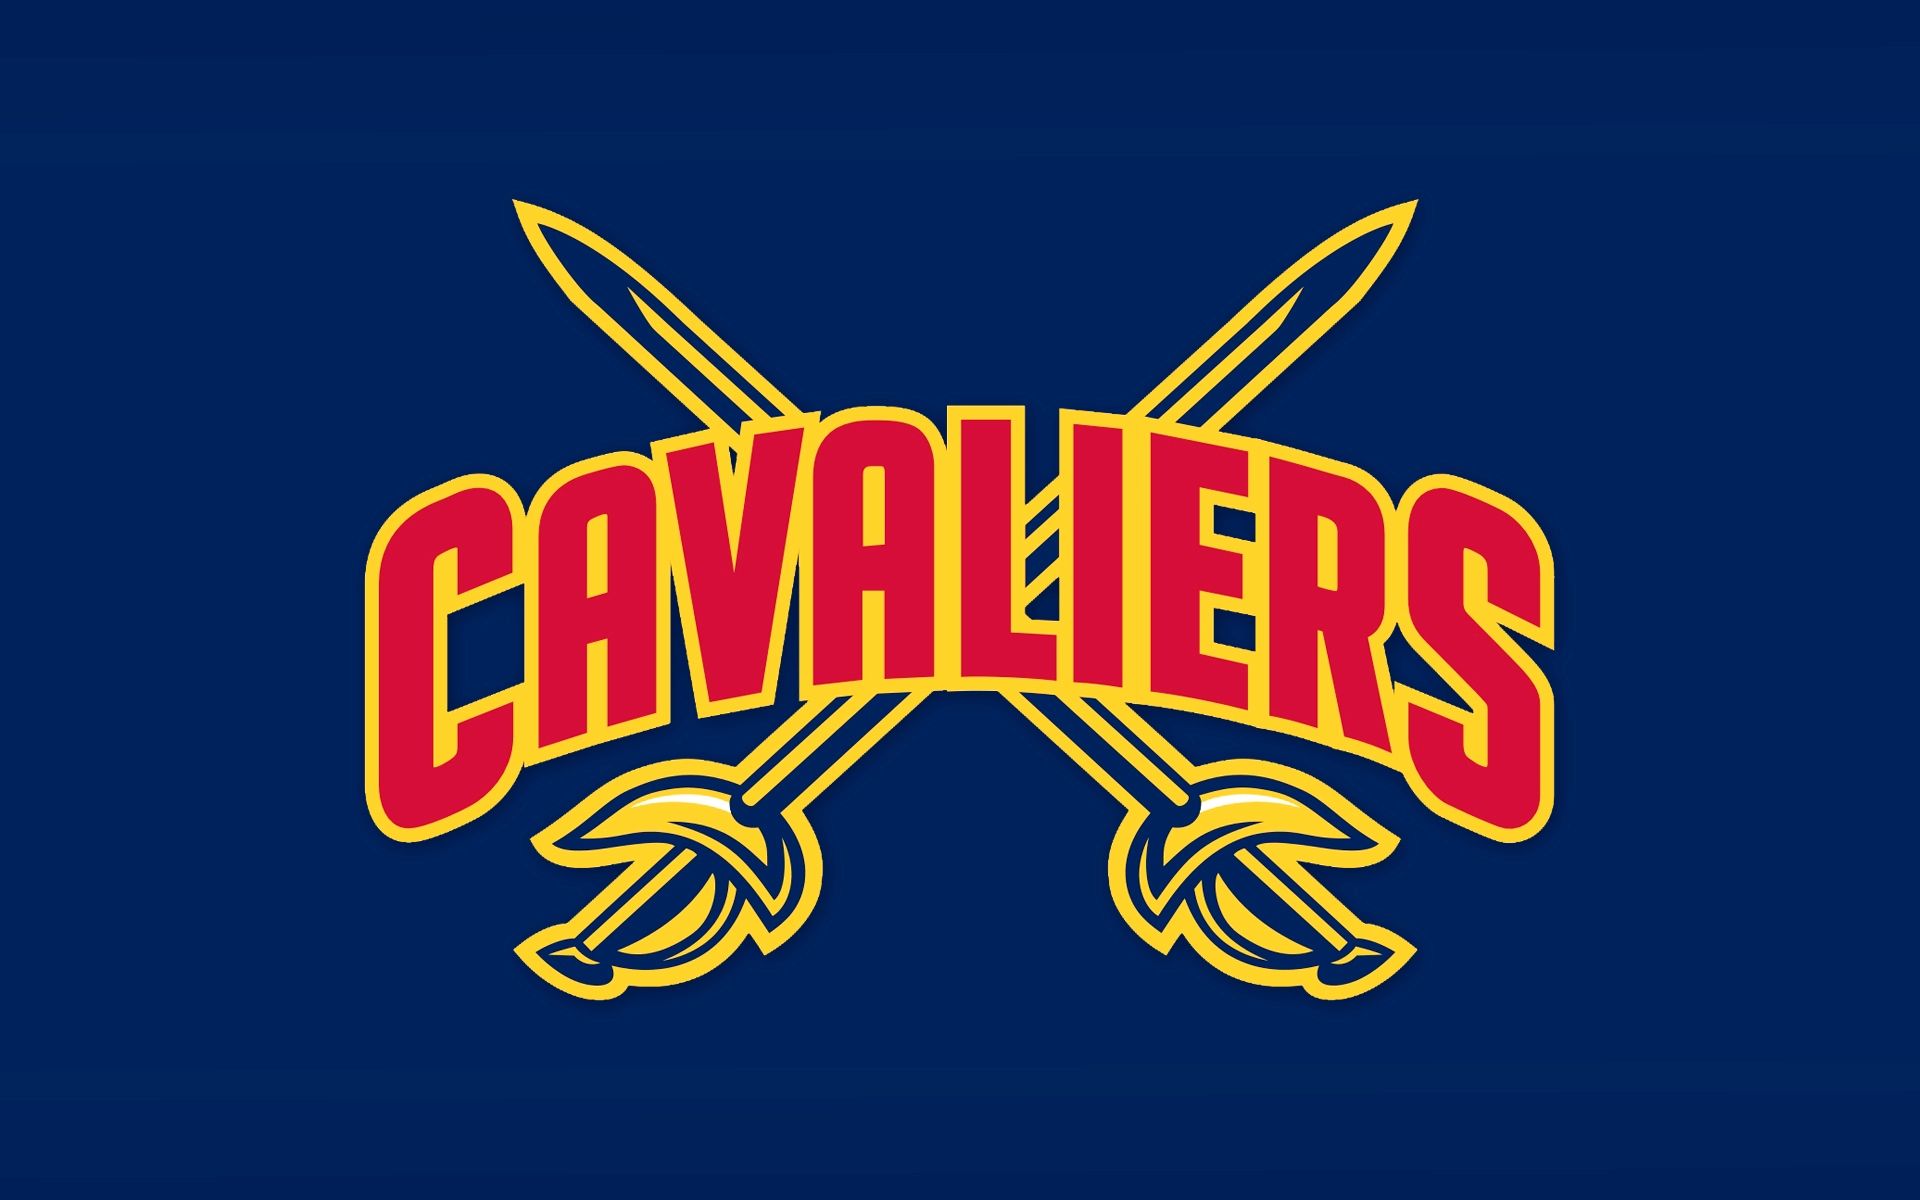 Cleveland Cavaliers Logo Wallpaper Basketball Team NBA to Days